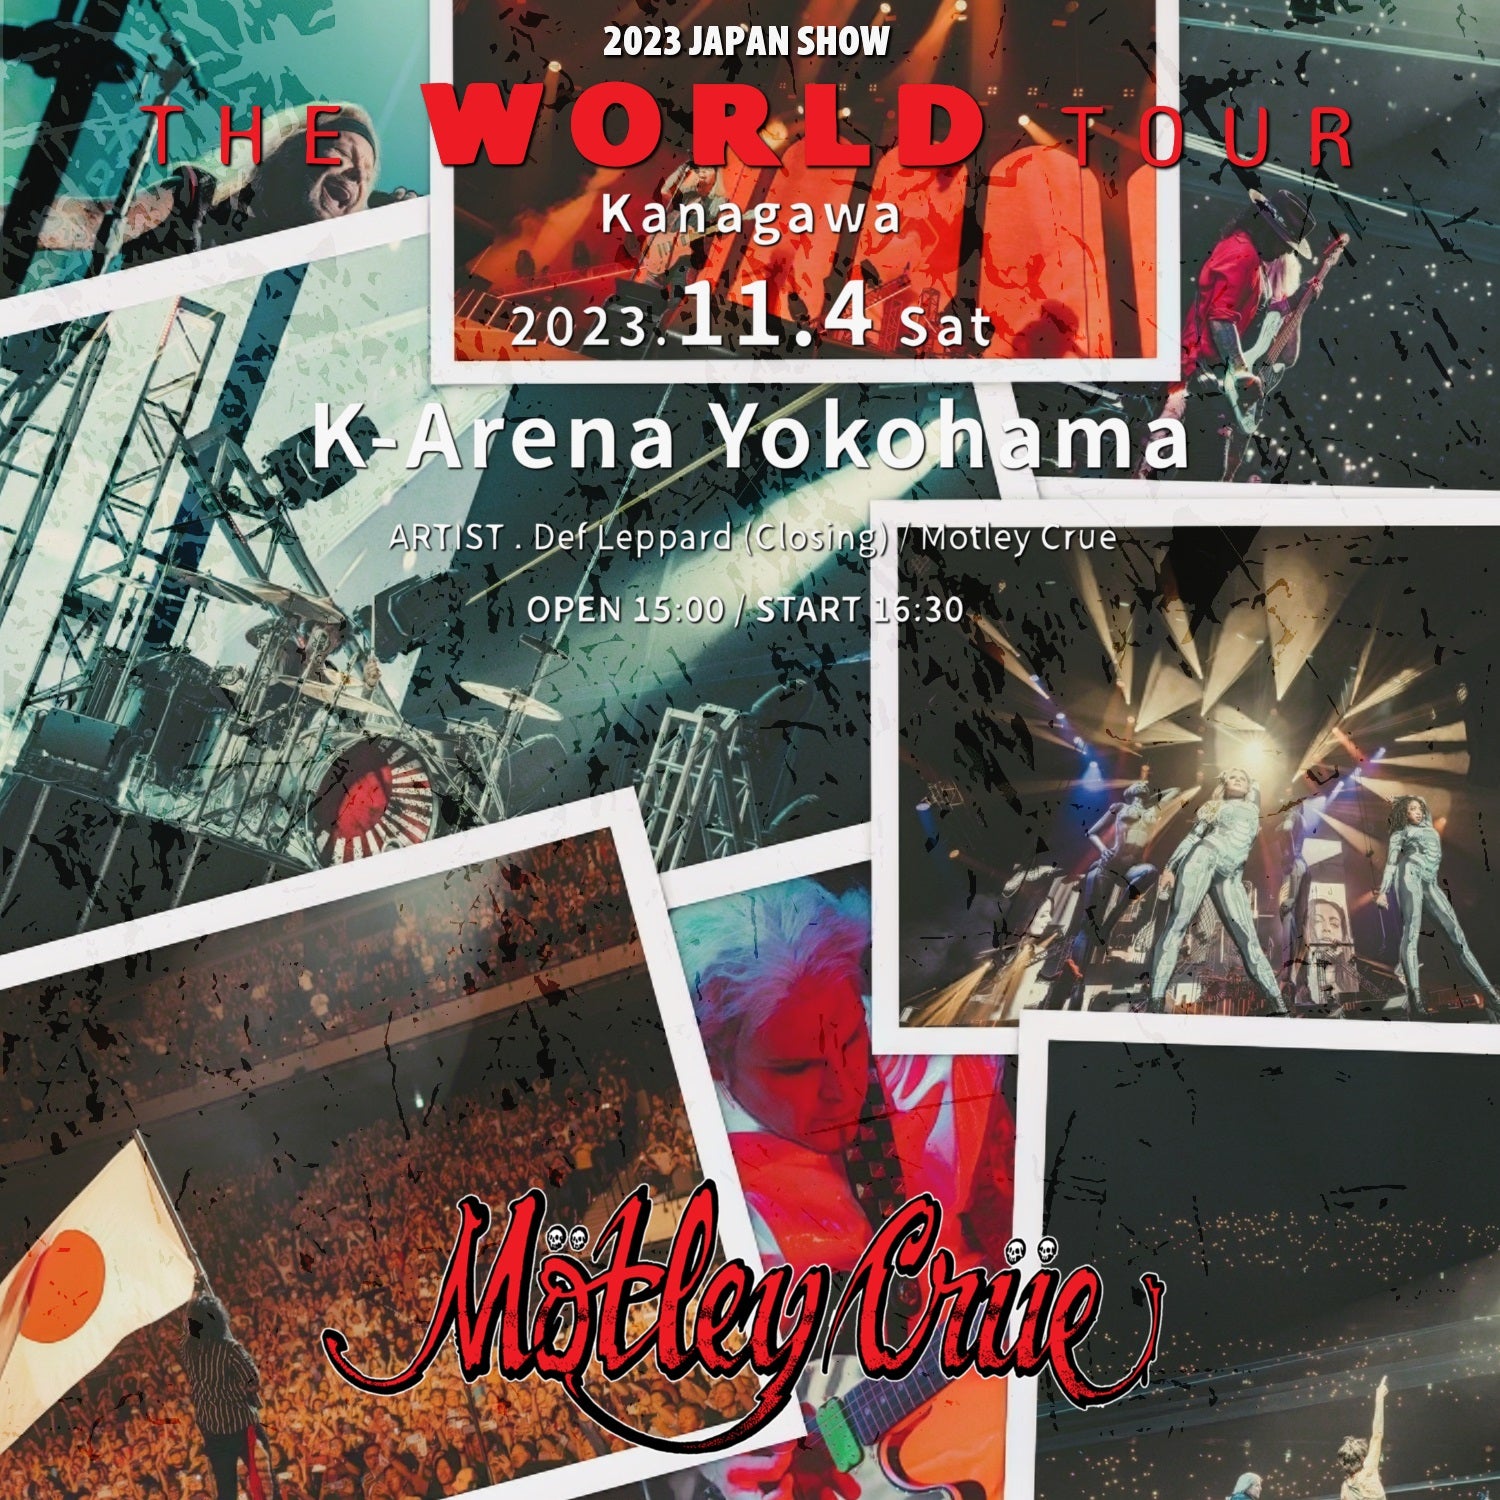 Motley Crue & Def Leppard / Japan Tour 2023 K-Arena Yokohama (2CDR 